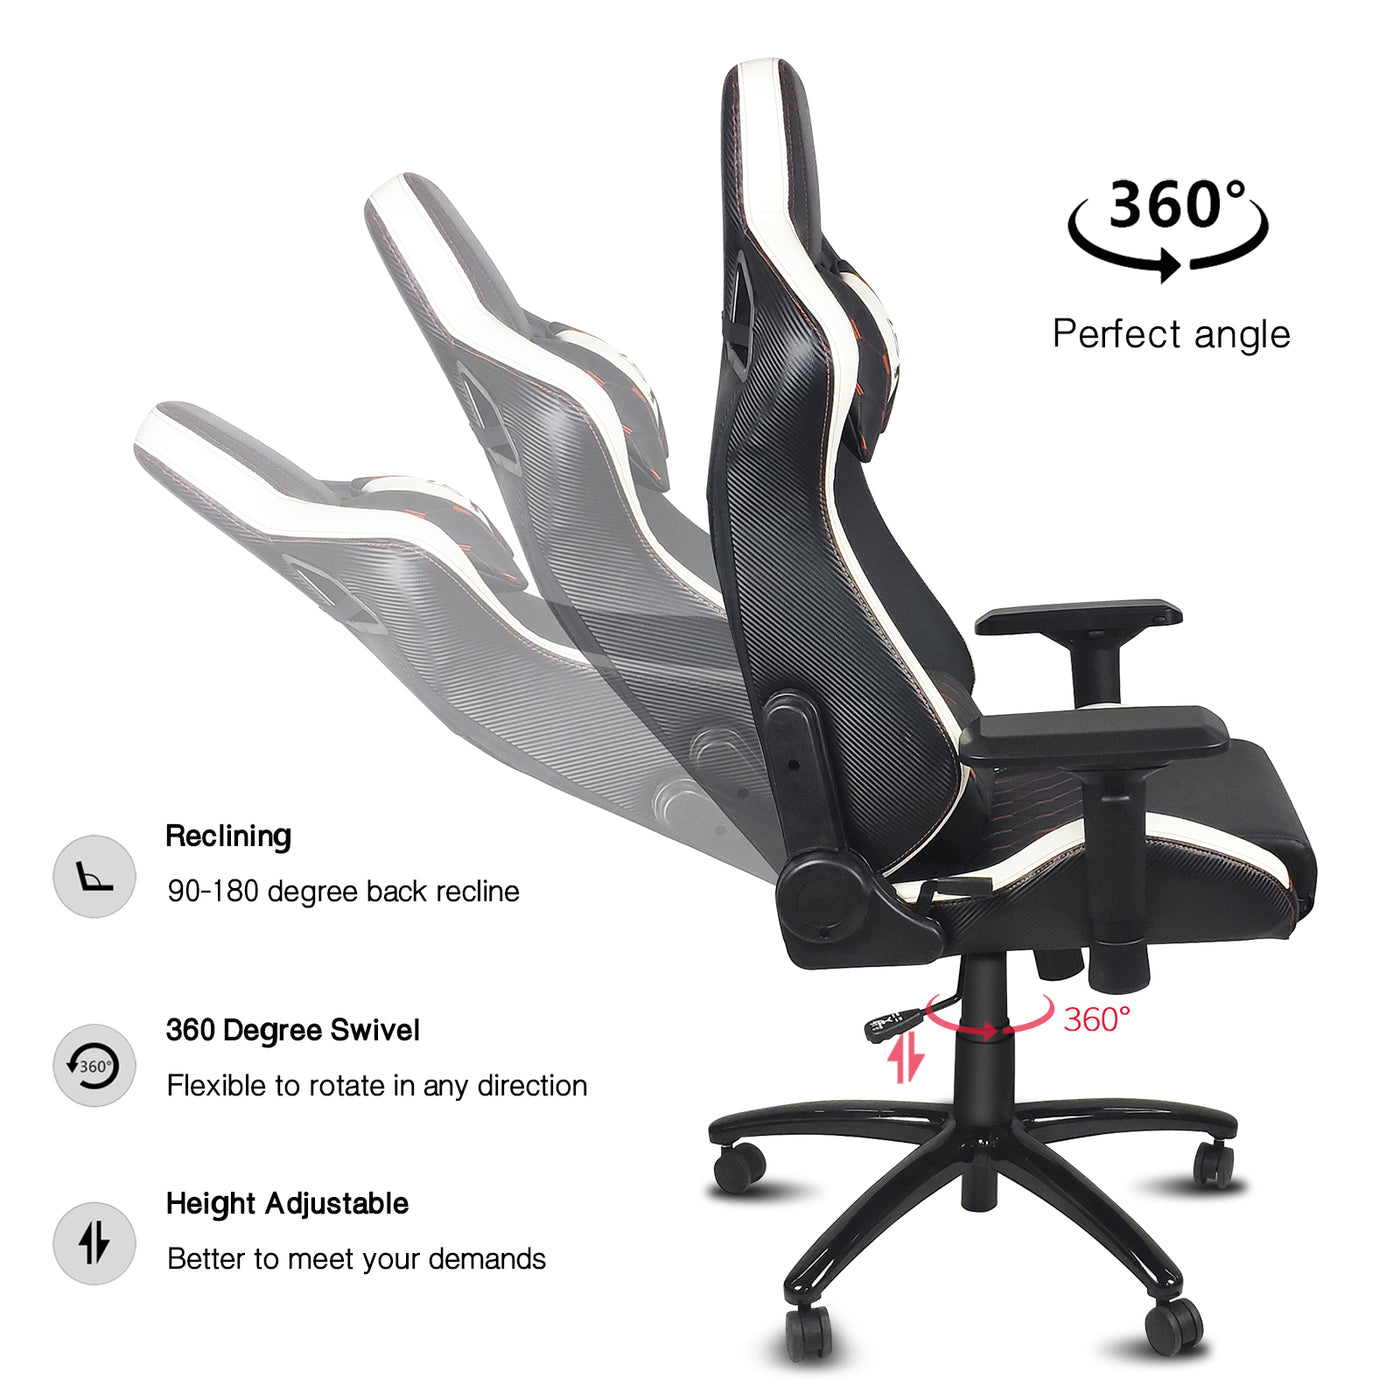 Gaming Chair Racing Ergonomic Recliner Office Computer Desk Seat Swivel Headrest